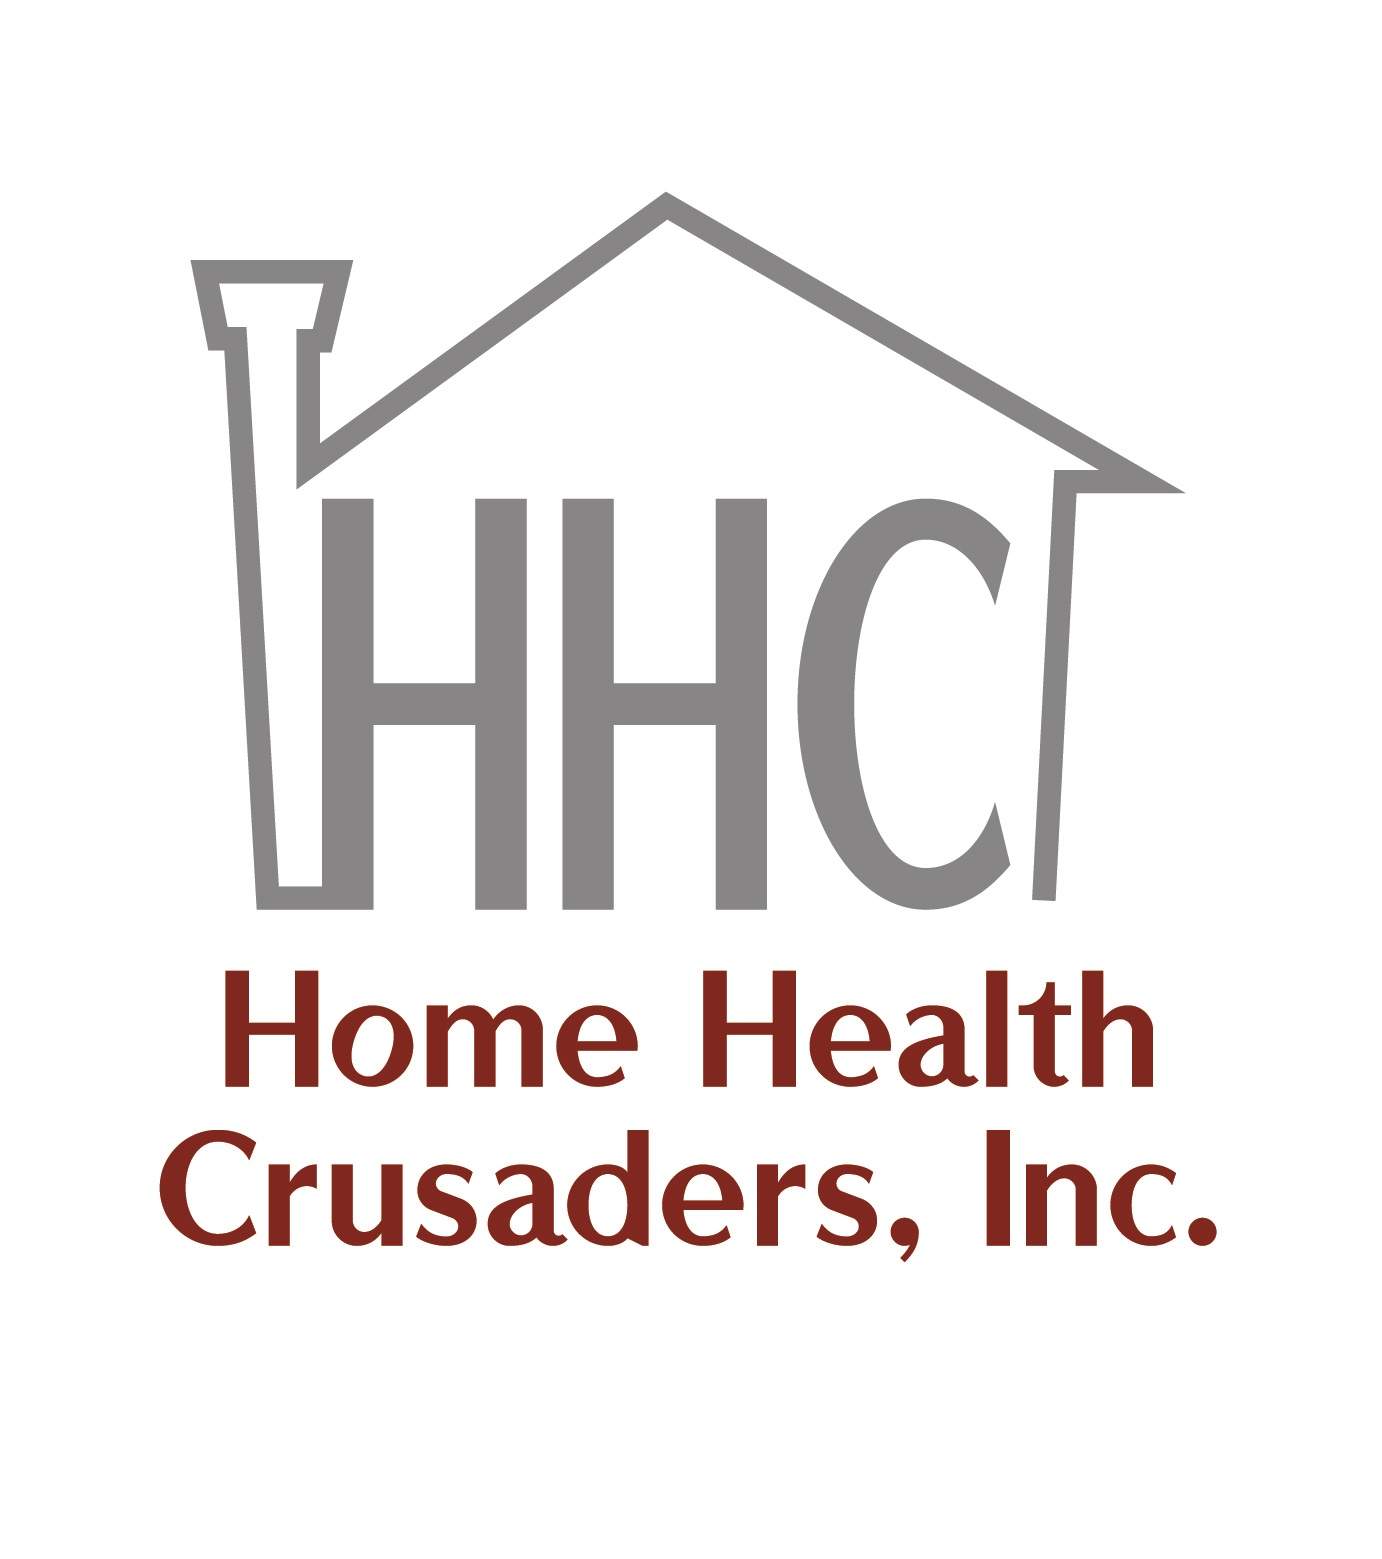 Home Health Crusaders